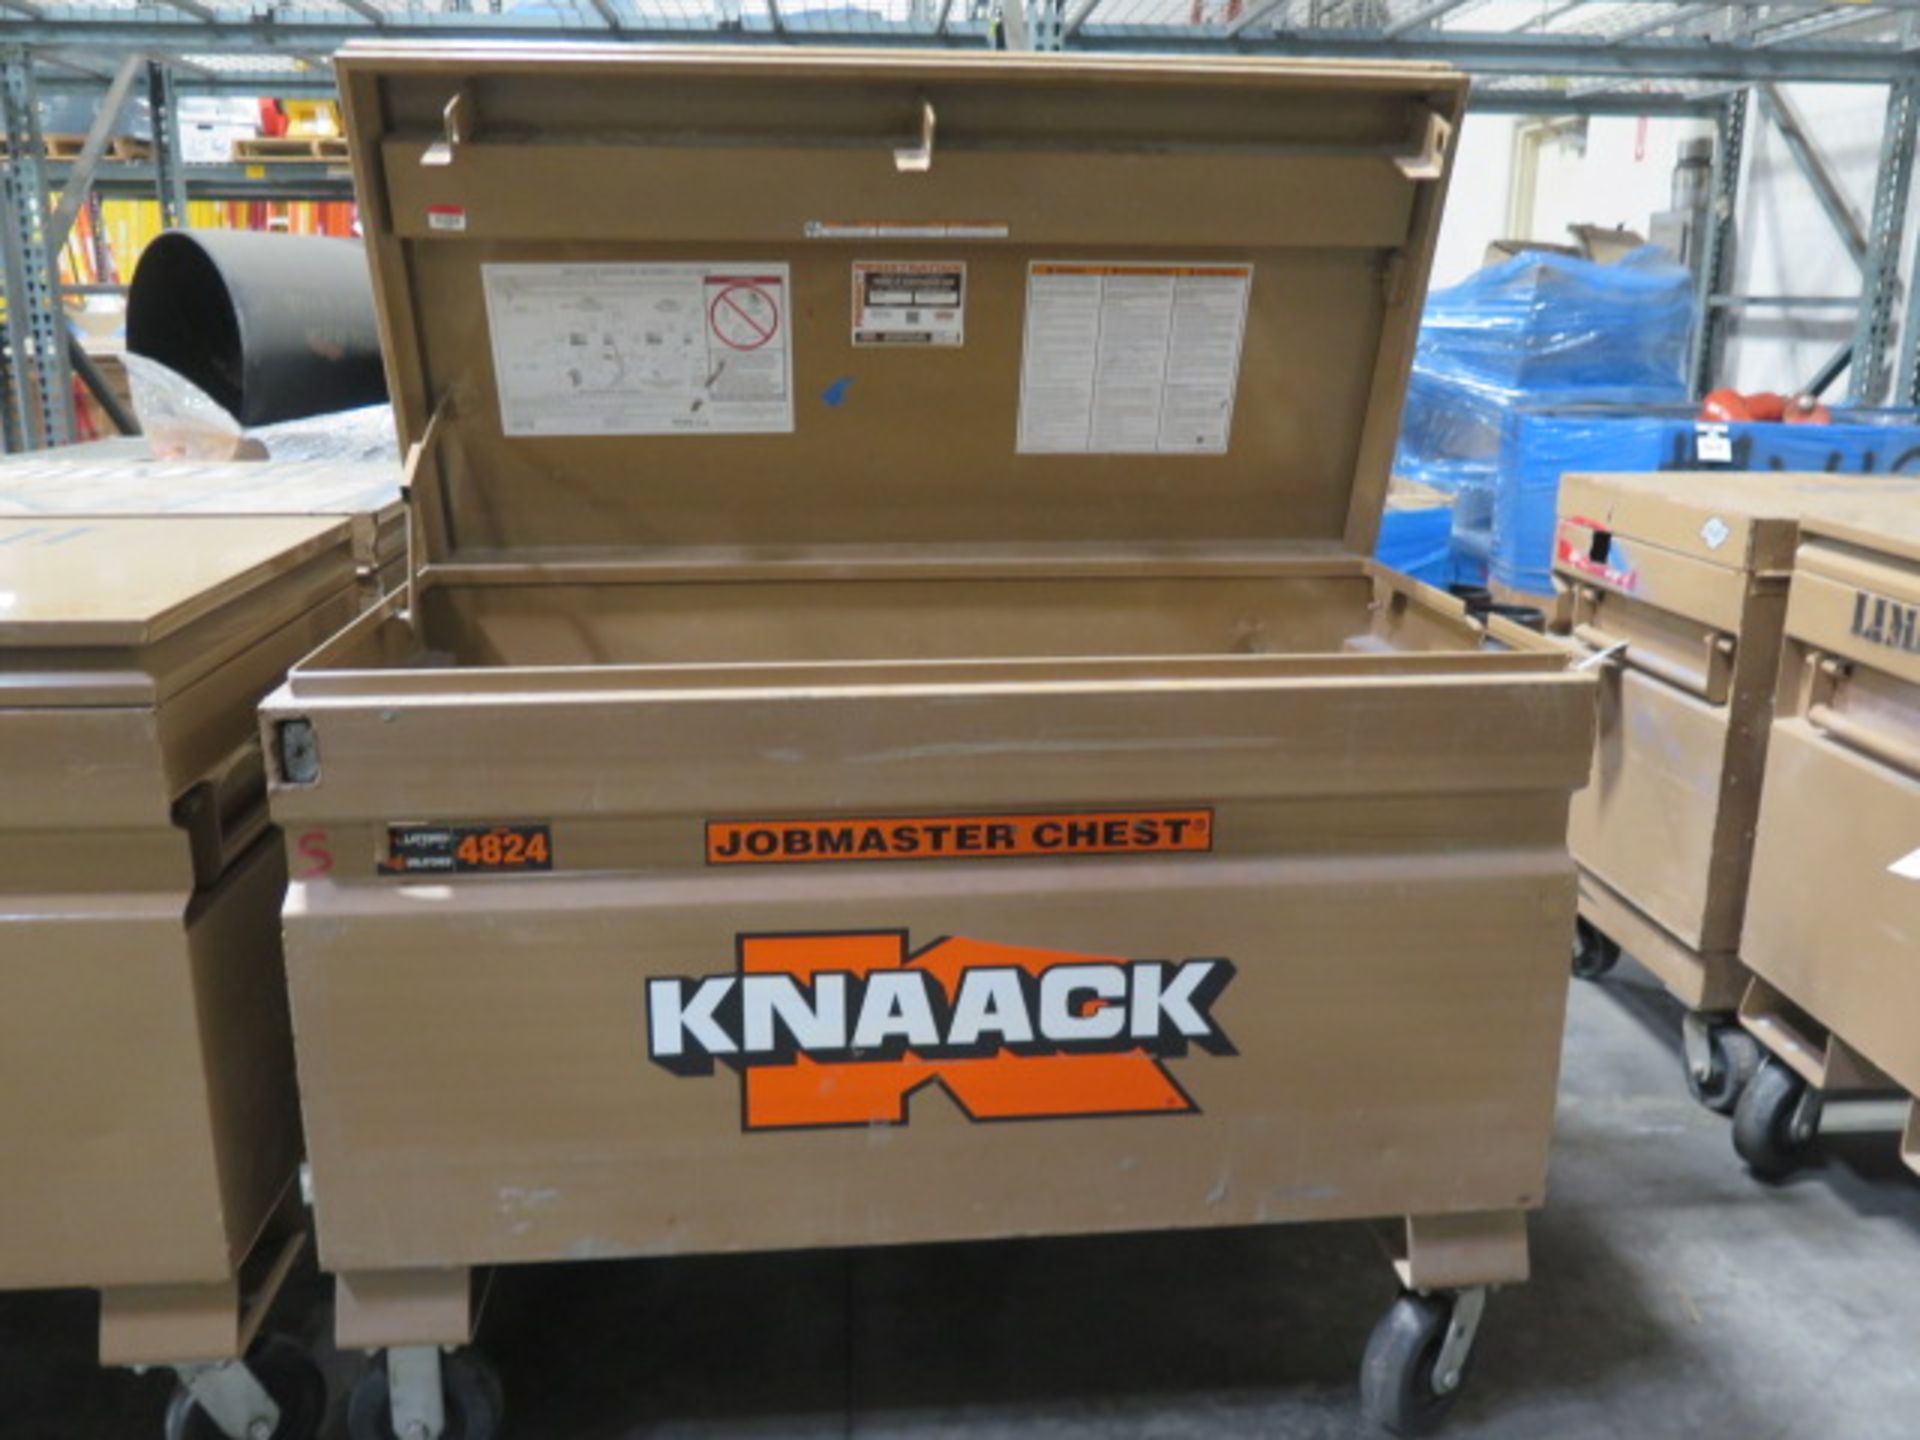 Knaack mdl. 4824 Rolling Job Box (SOLD AS-IS - NO WARRANTY) - Image 3 of 5